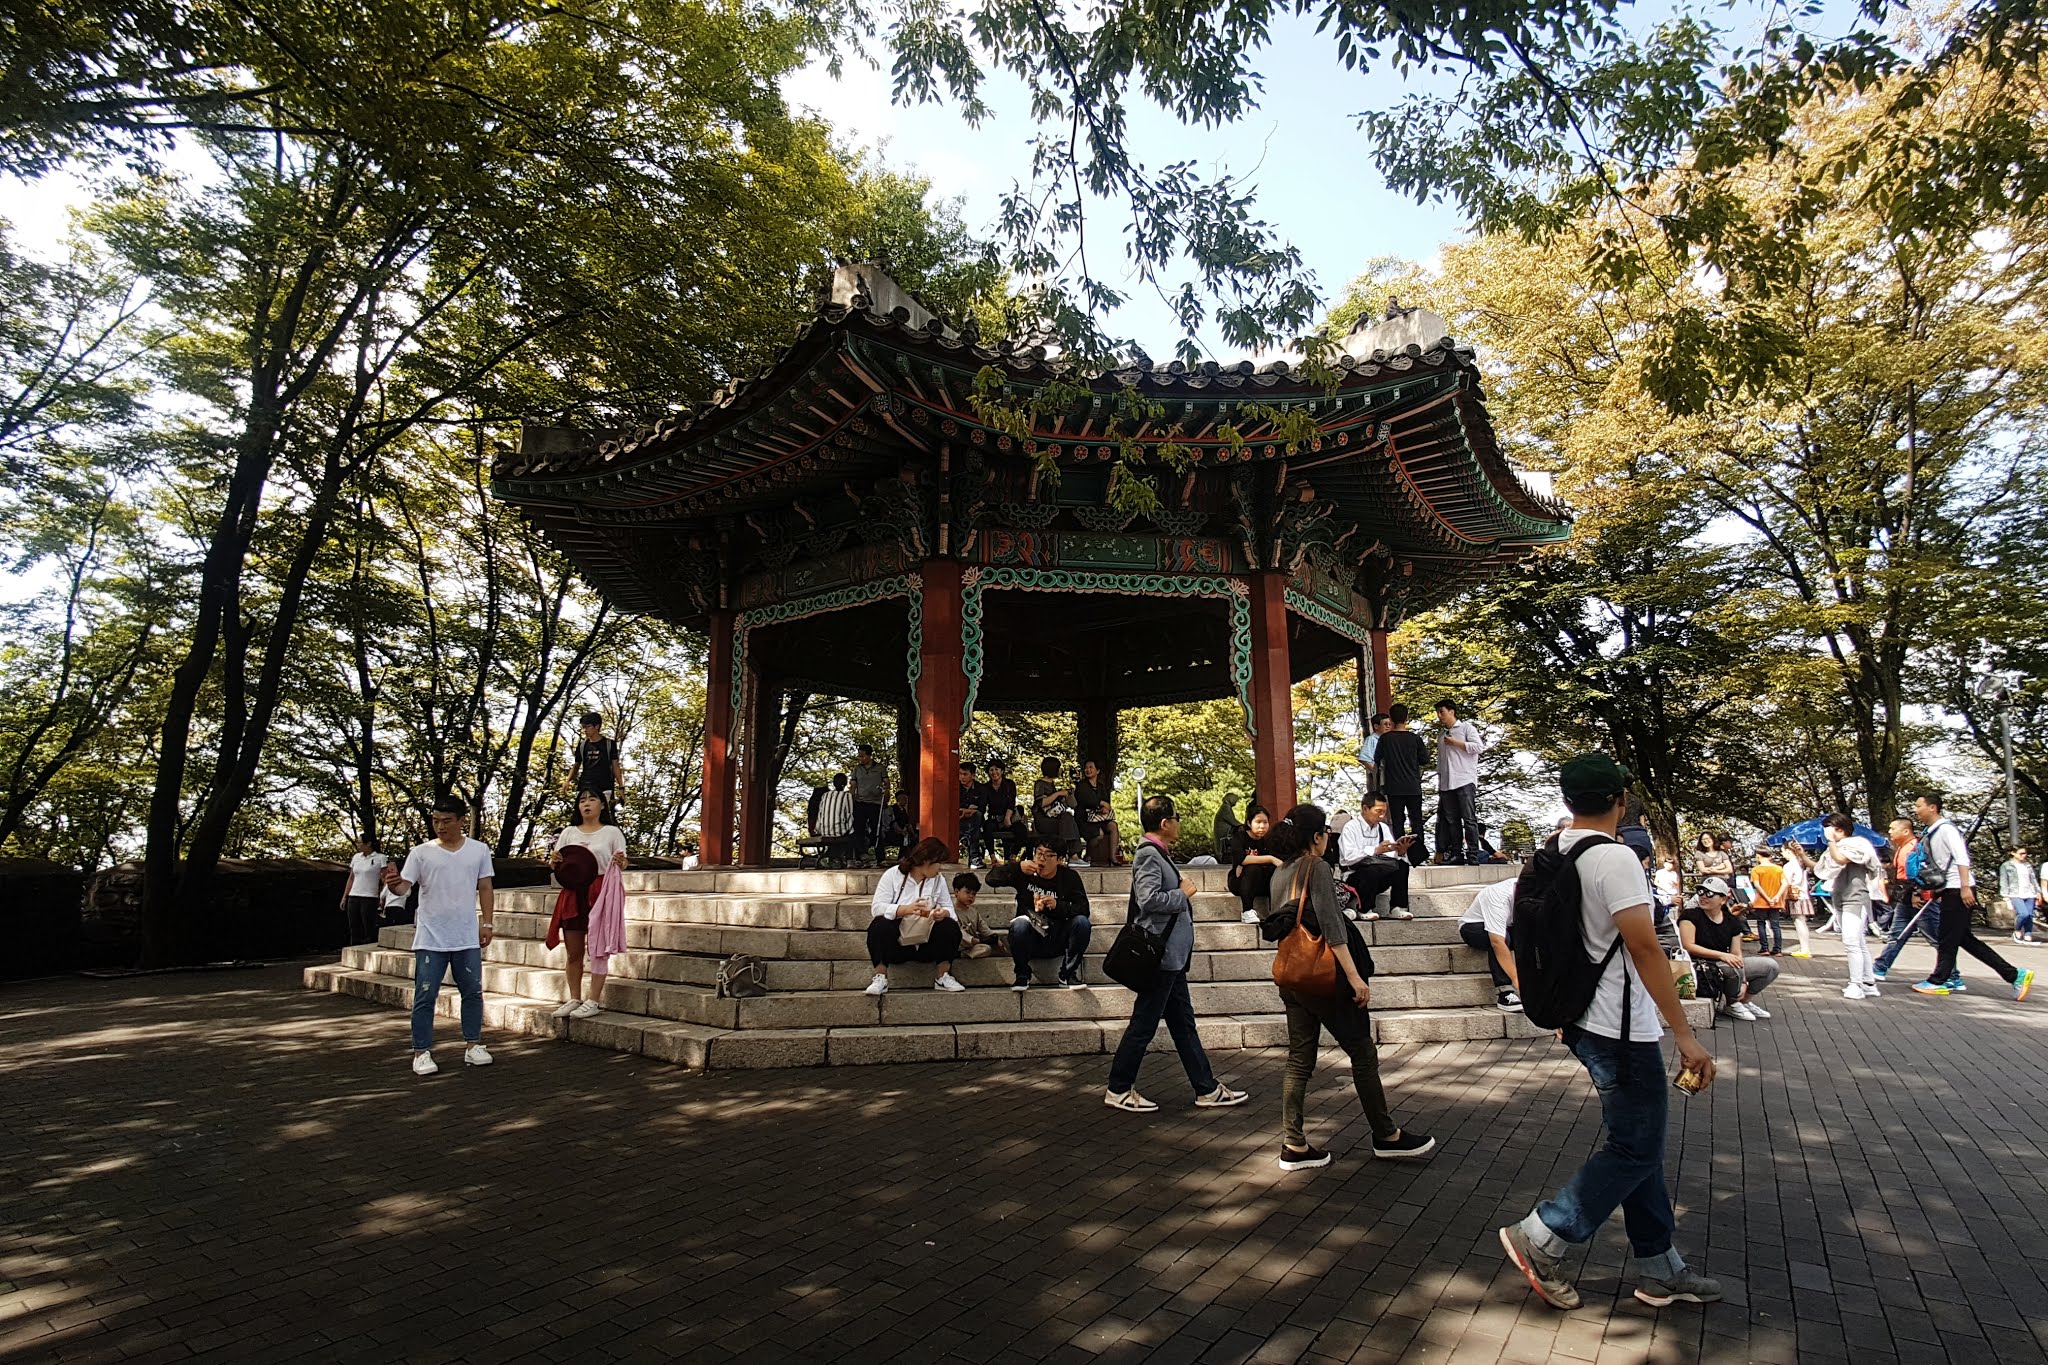 Pavilion at the Namsan Seoul Tower (남산서울타워)